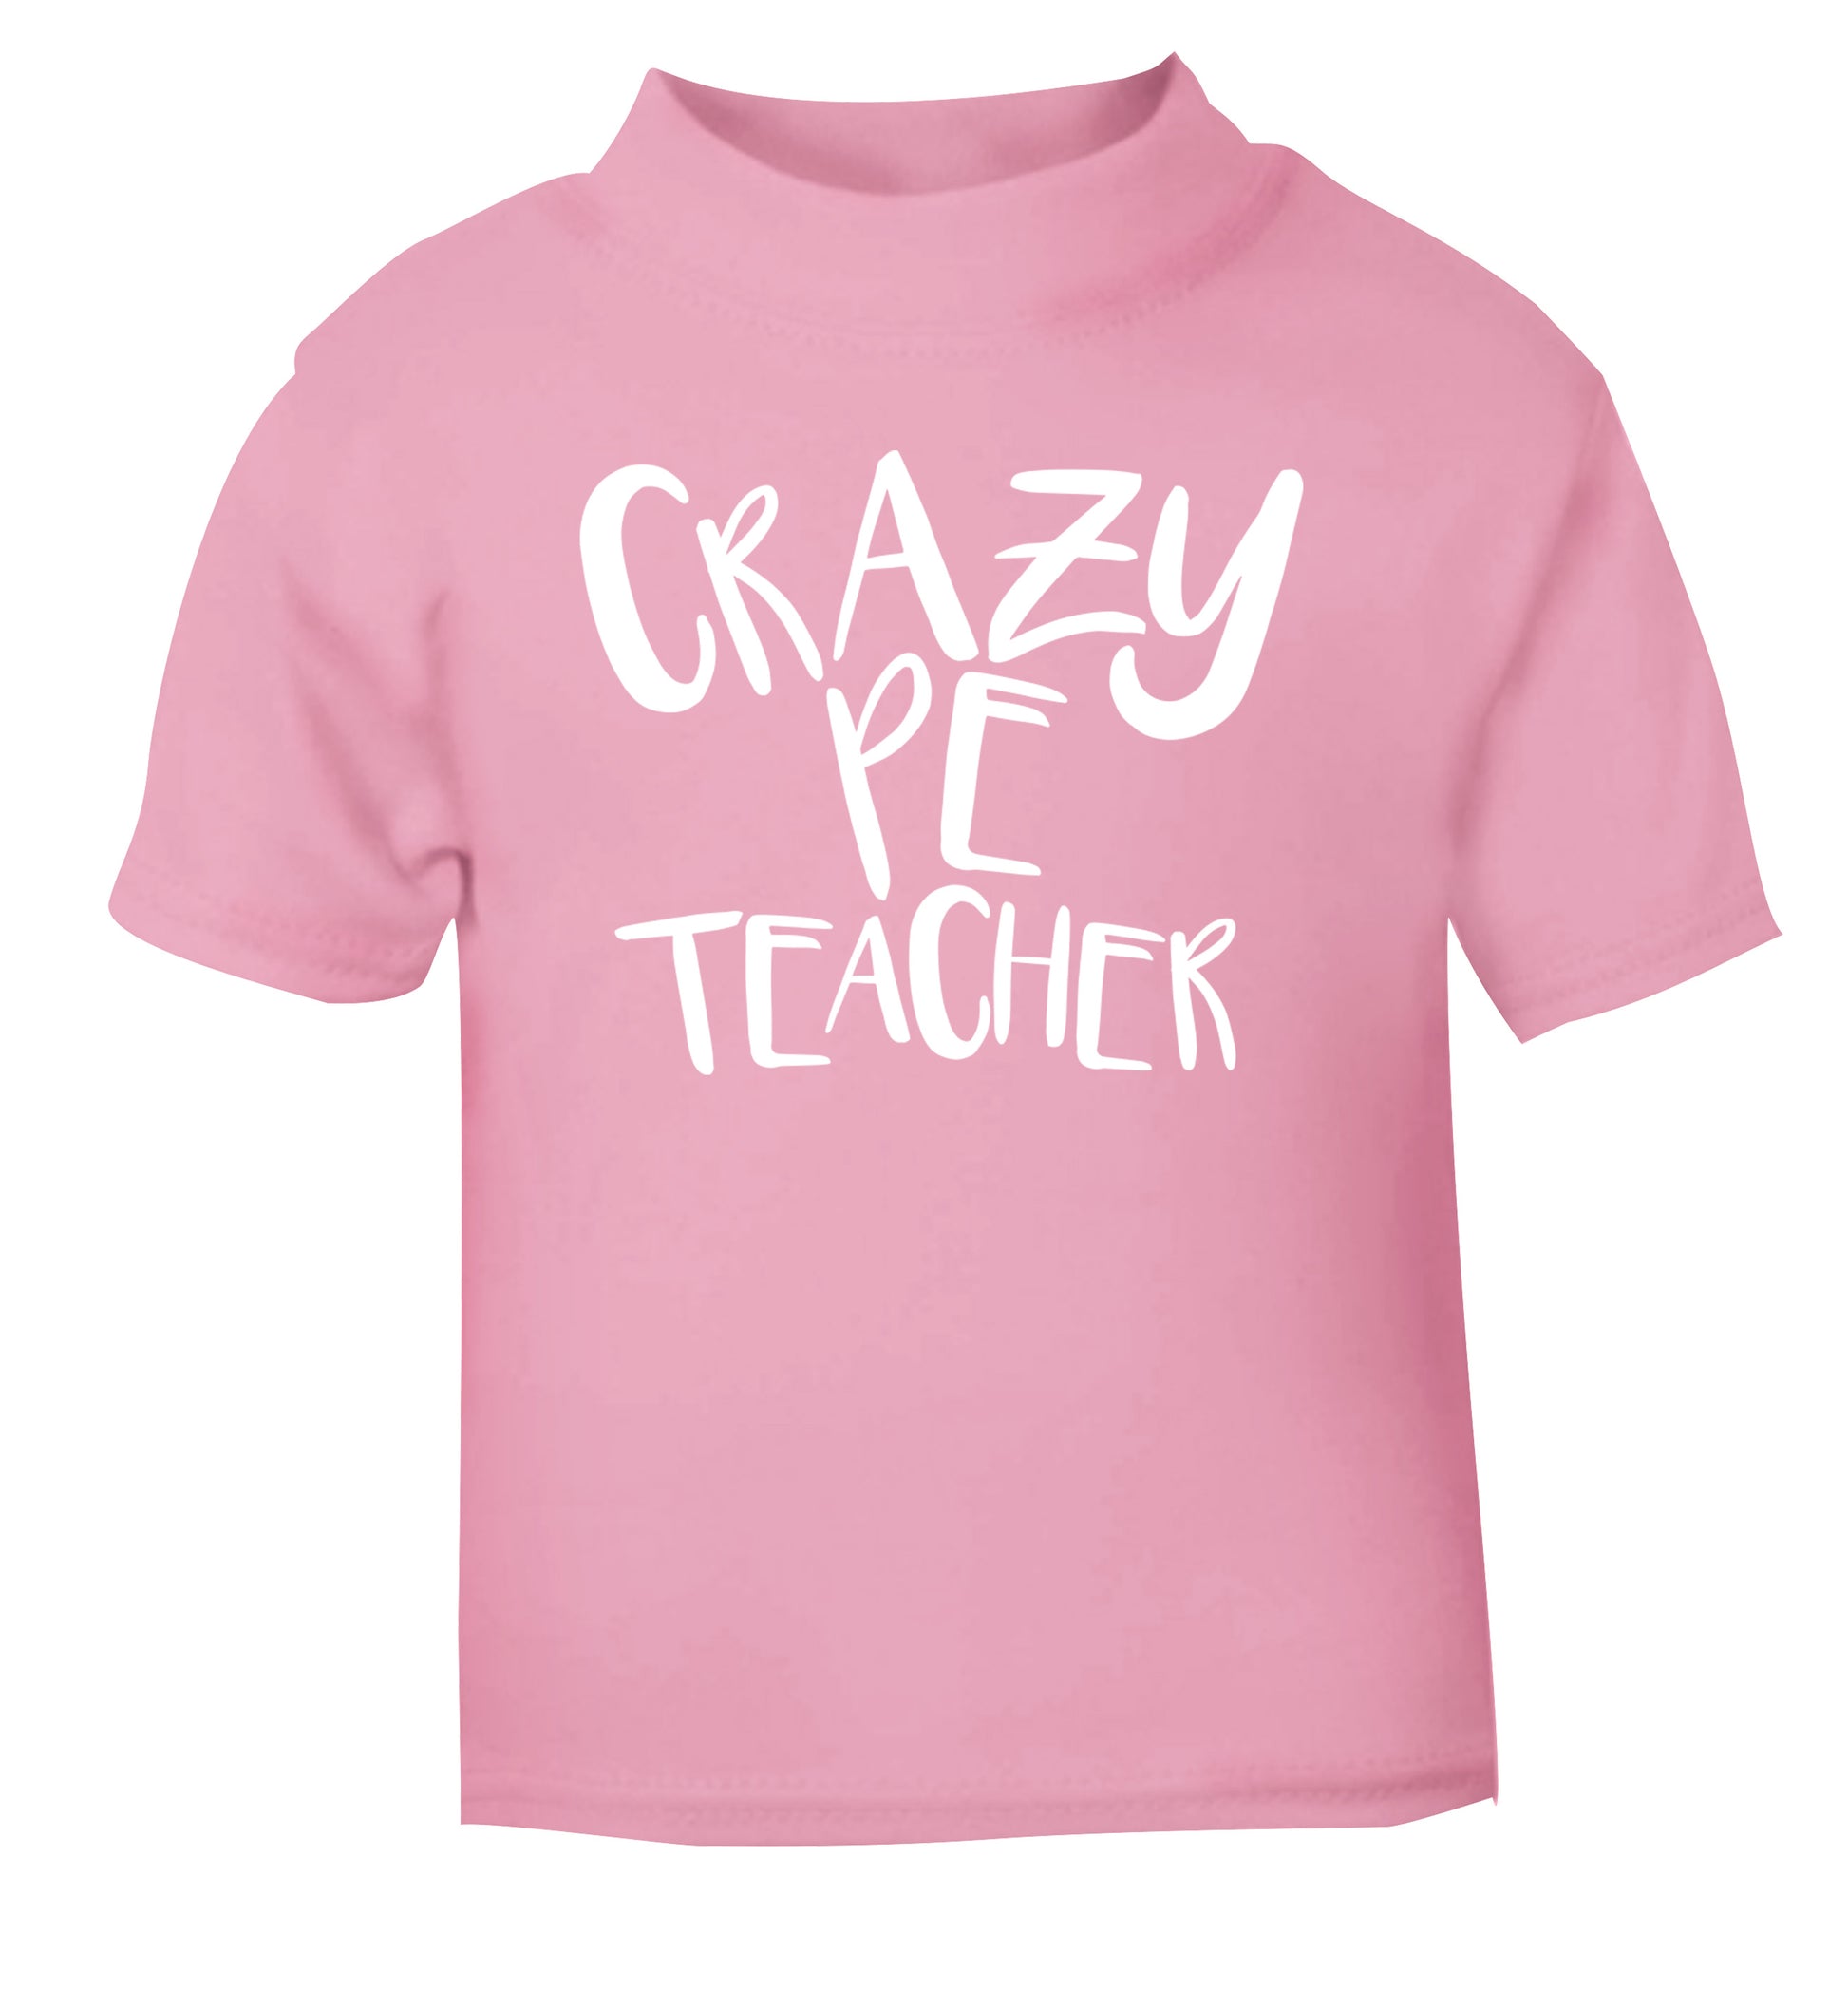 Crazy PE teacher light pink Baby Toddler Tshirt 2 Years